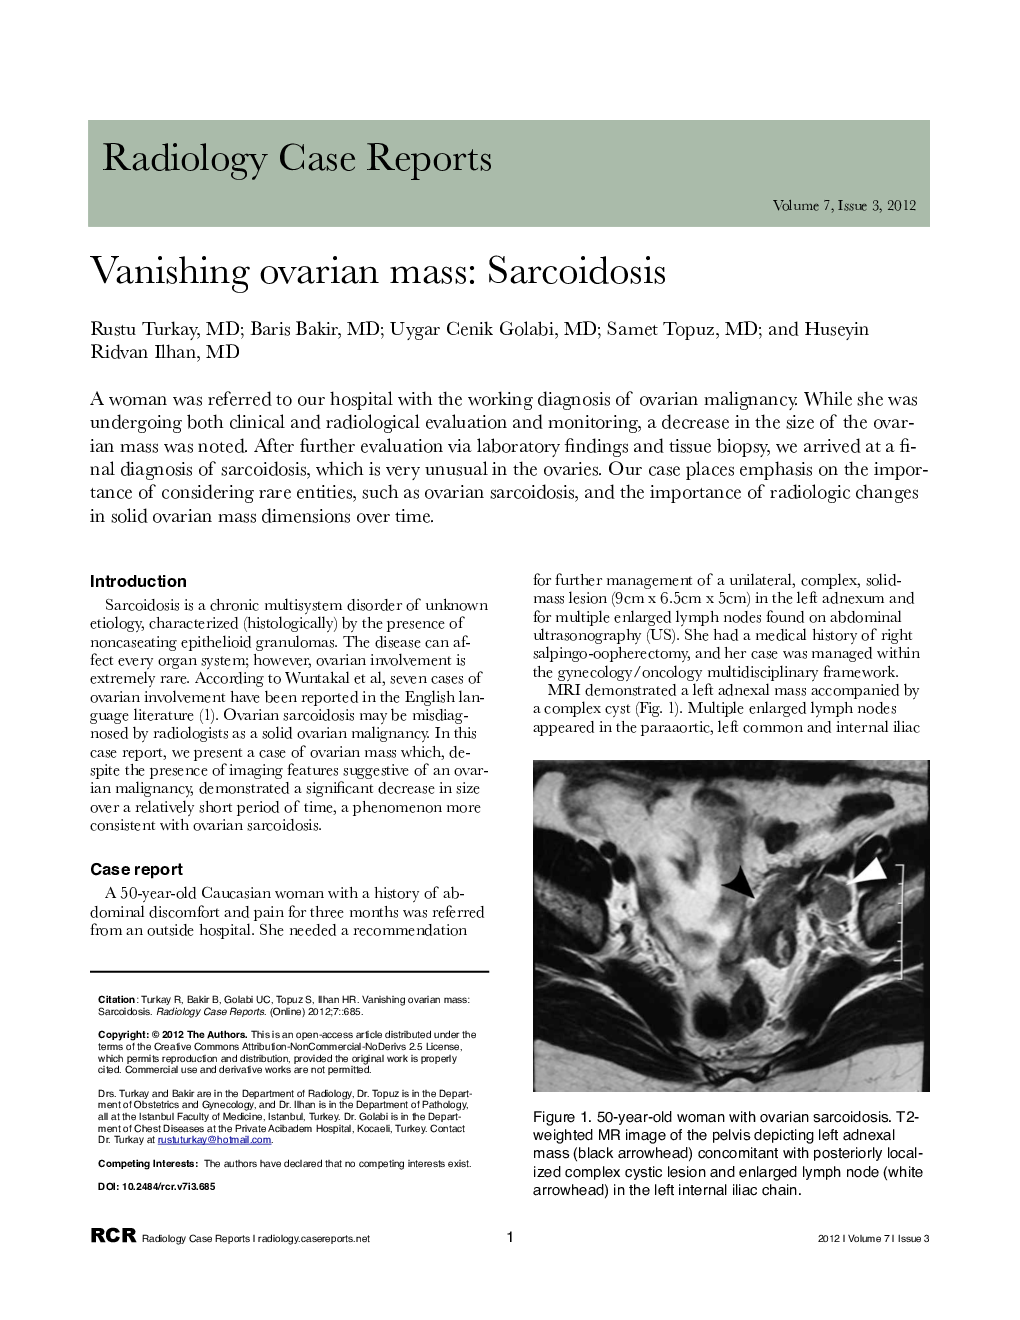 Vanishing ovarian mass: Sarcoidosis